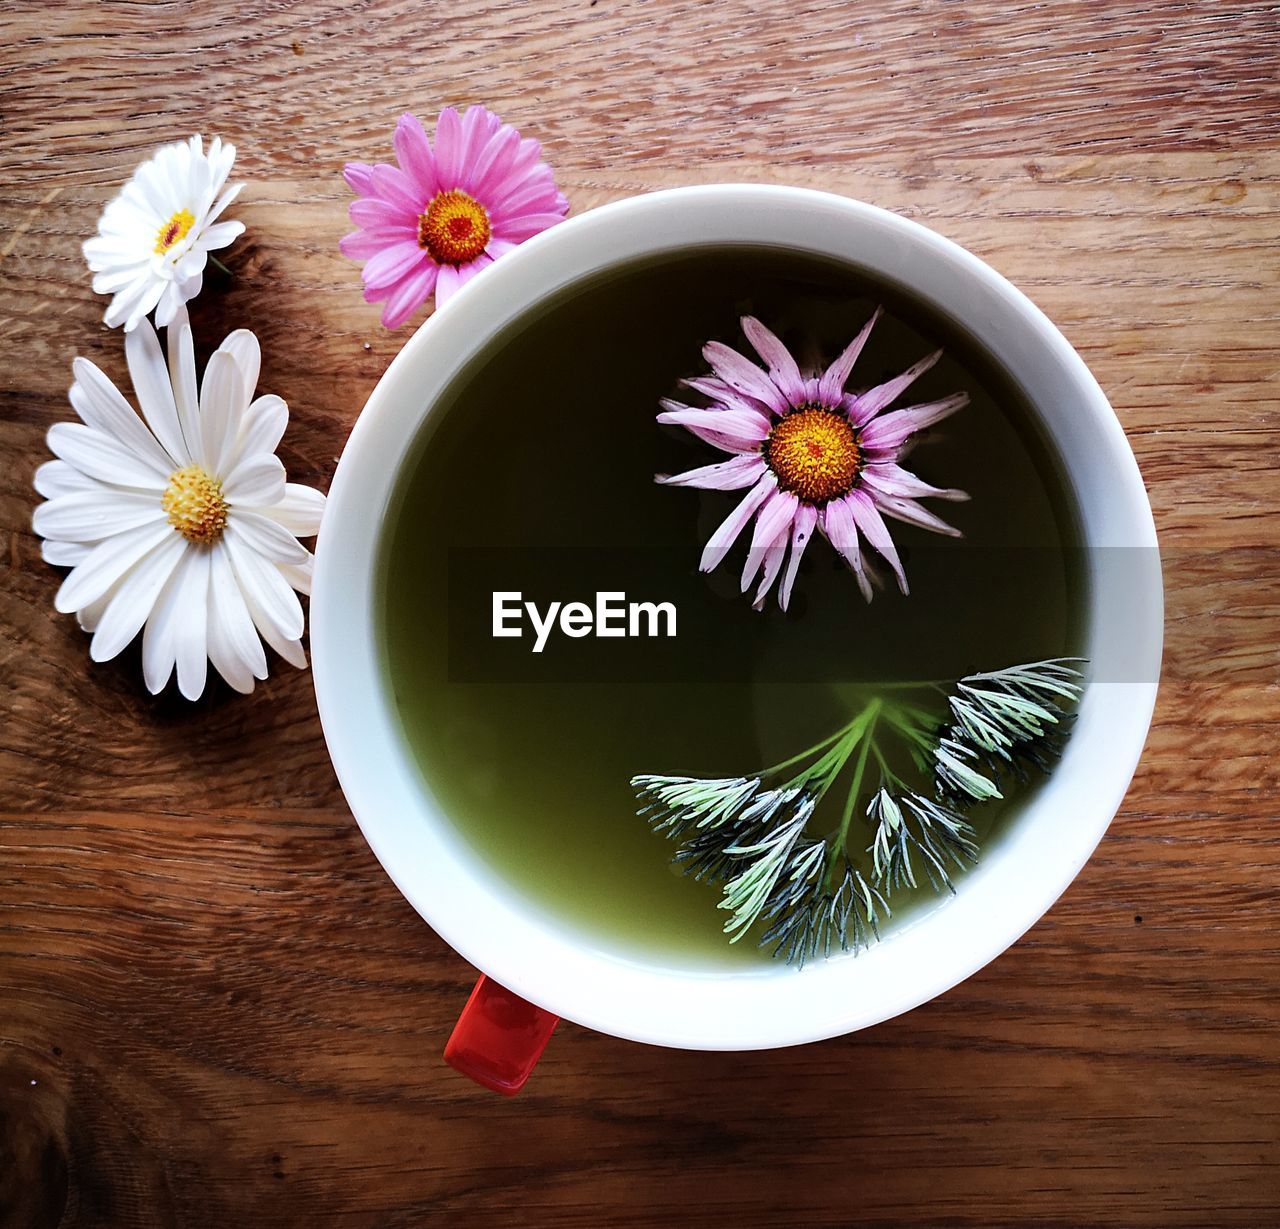 Green matcha tea with edible flowers